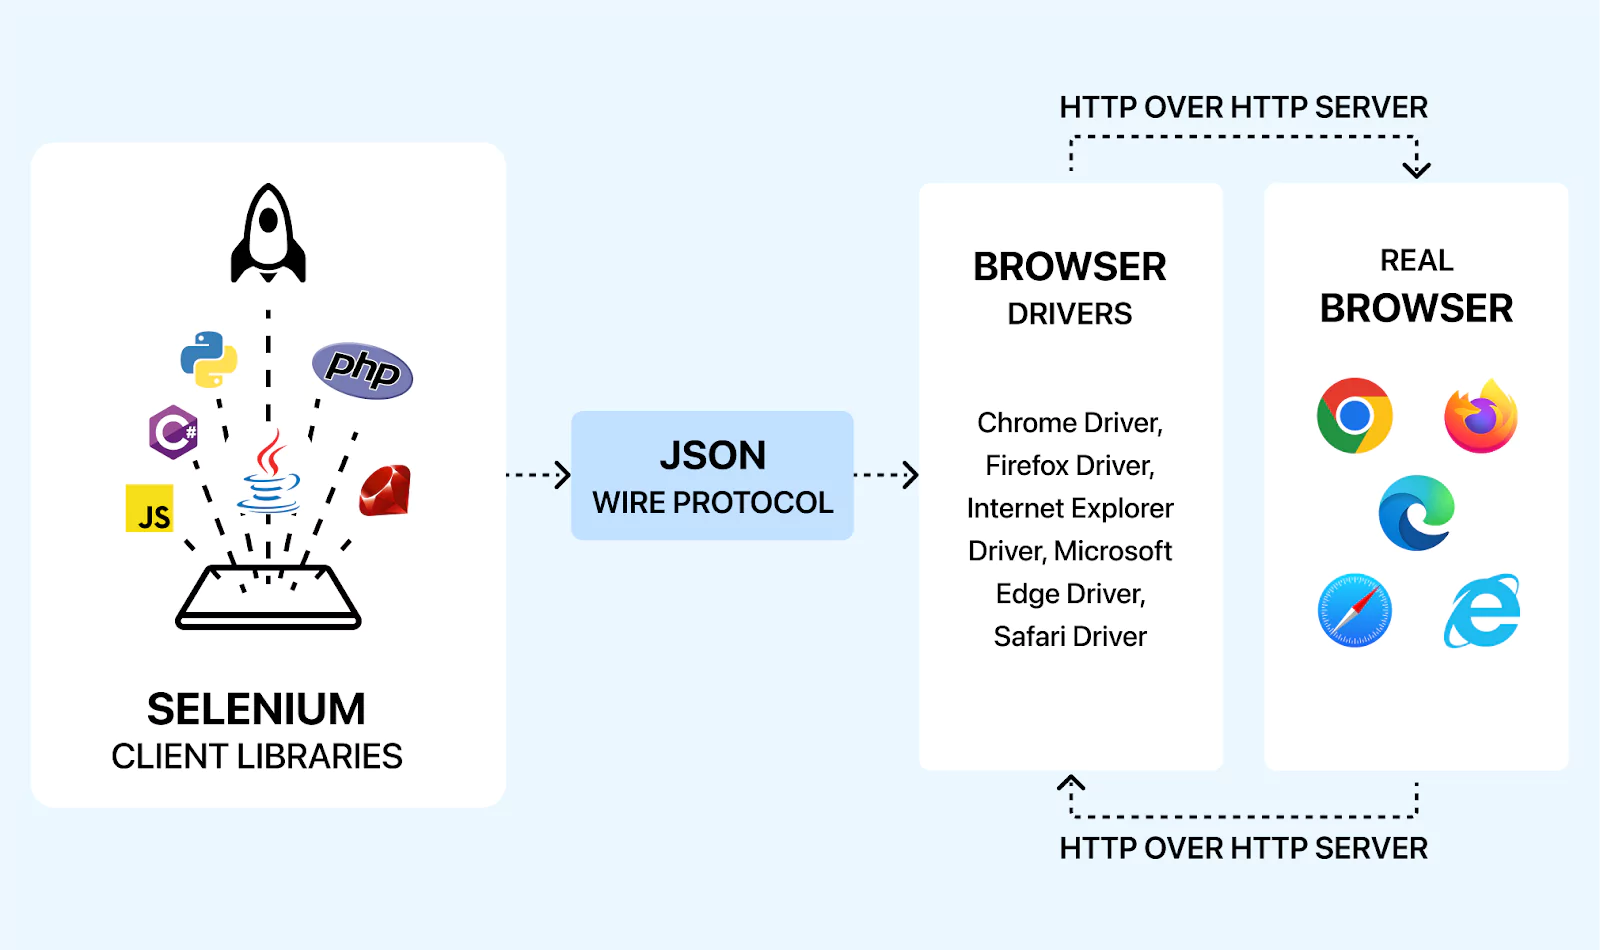 RemoteWebDriver server utilizes the JSON wire protocol